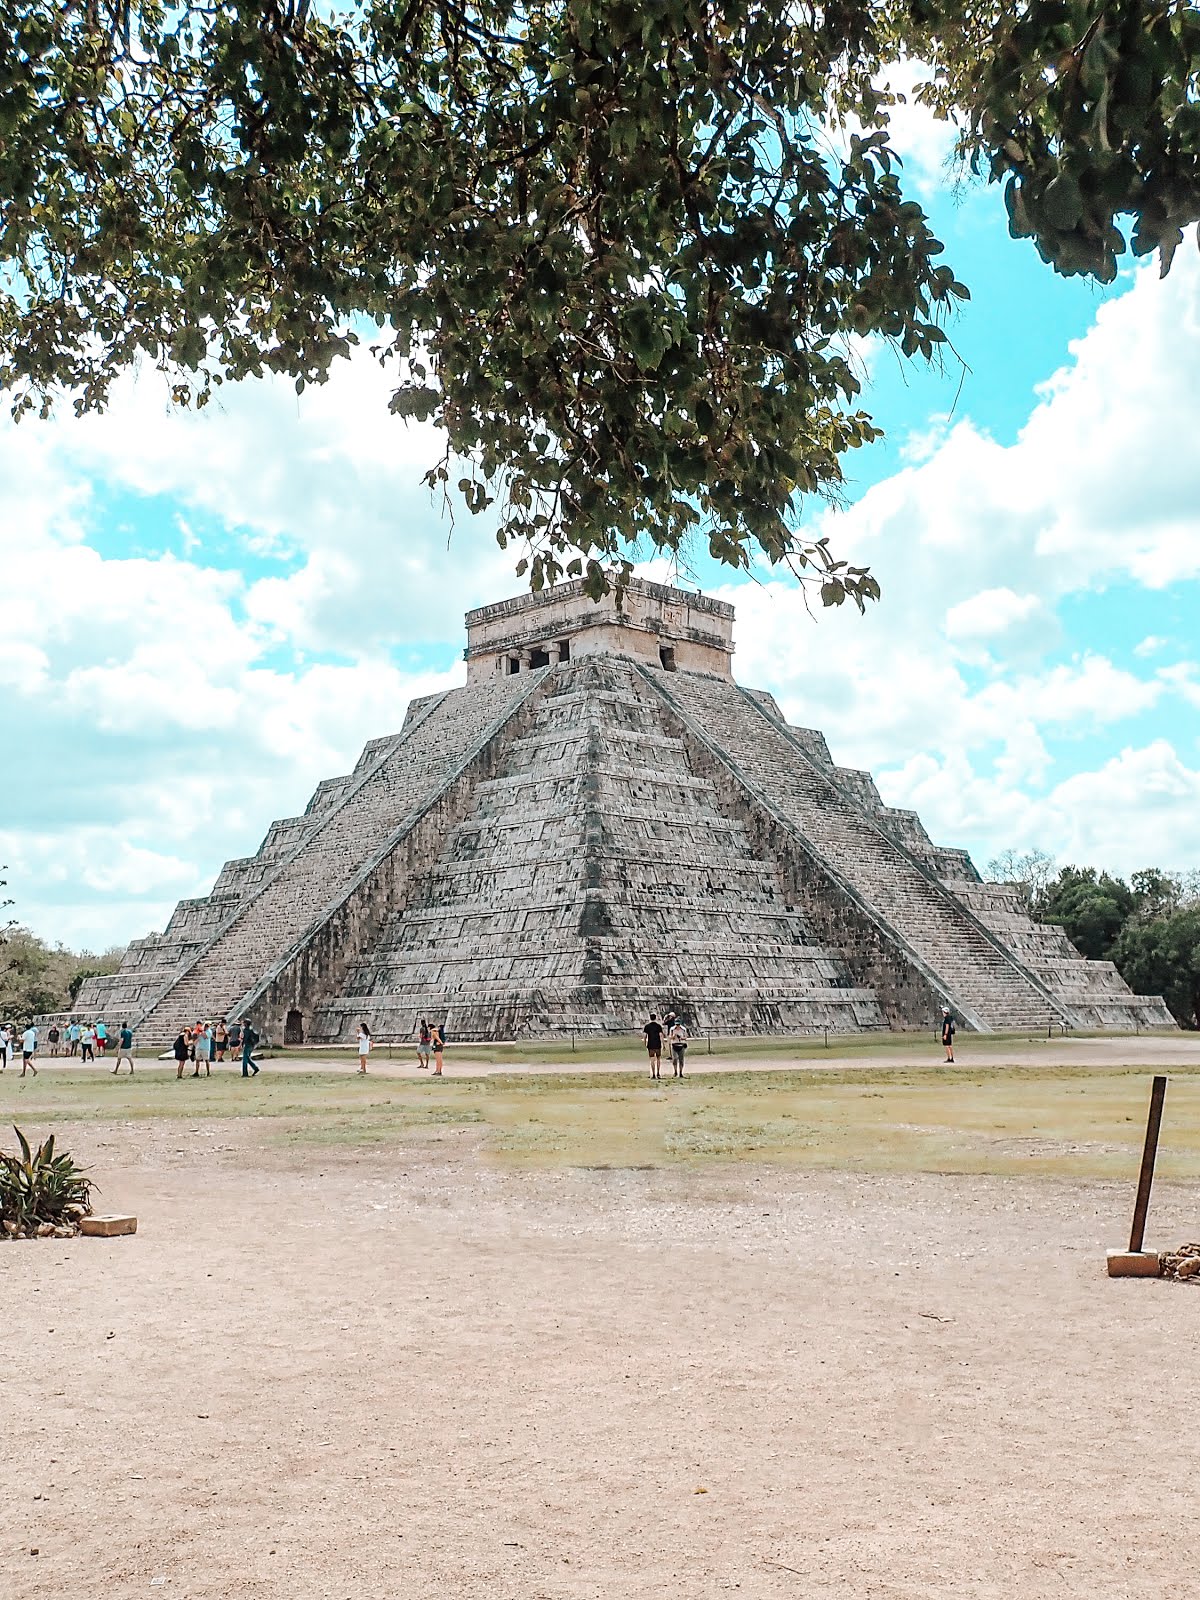 le temple maya de kukulcan el castillo sur le site de chichen itza au mexique